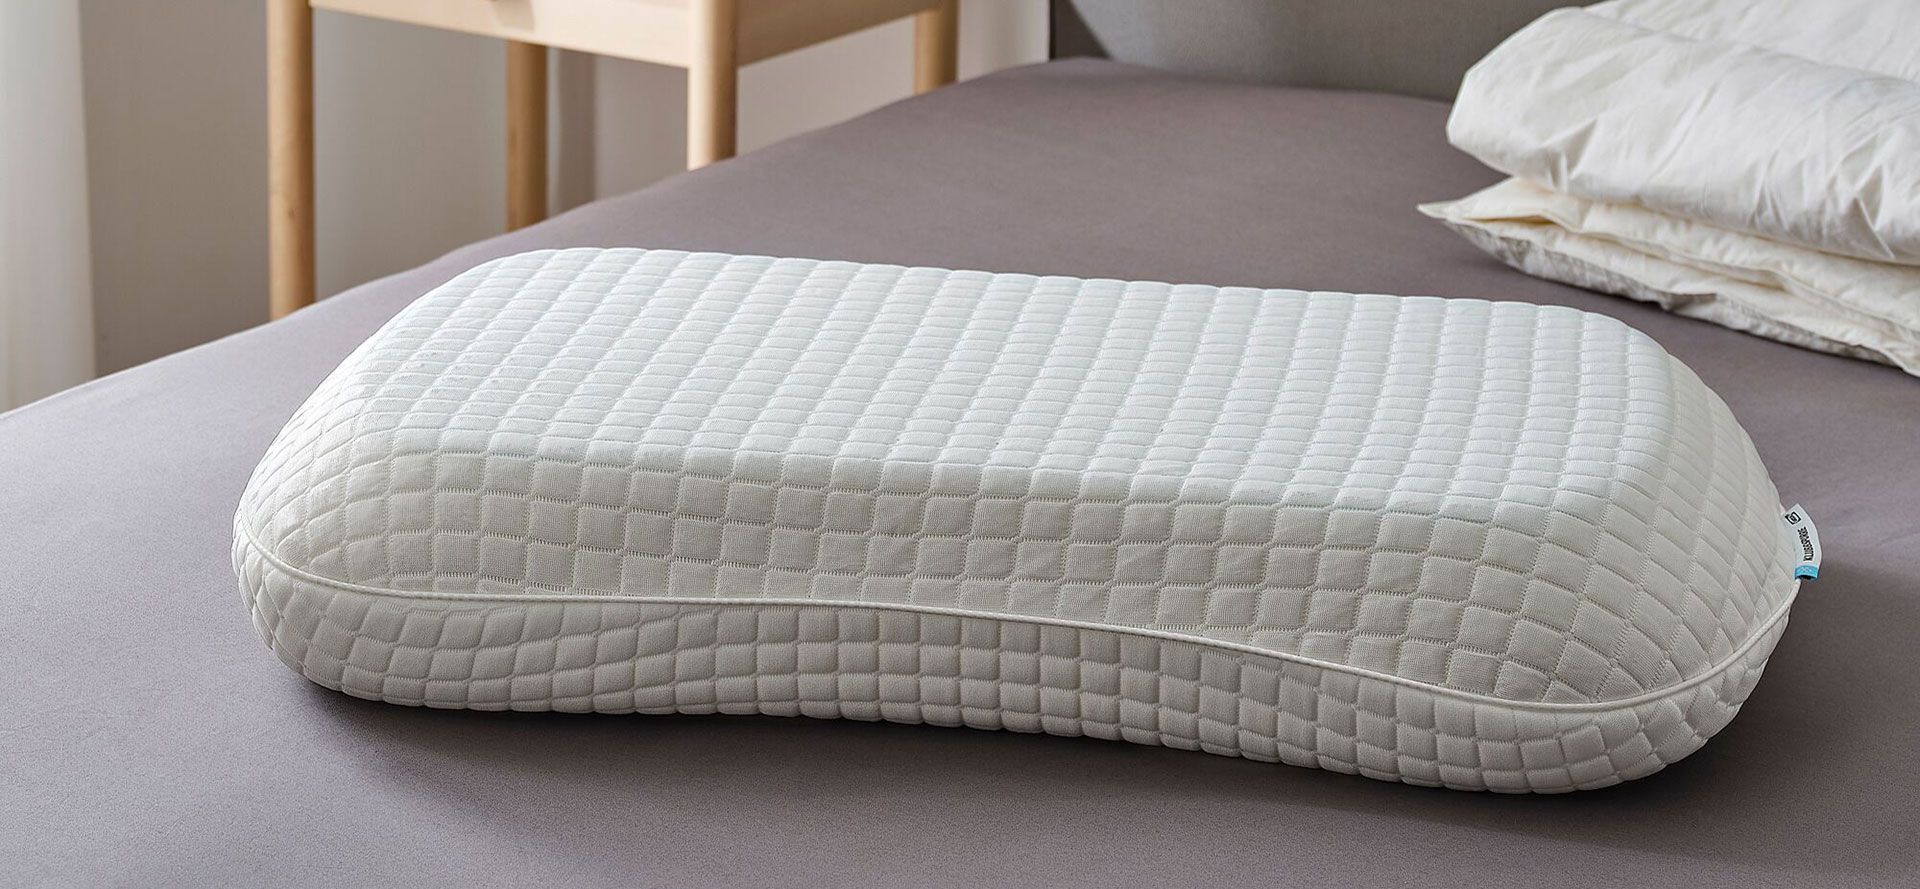 Memory Foam Pillow For Side Sleepers.